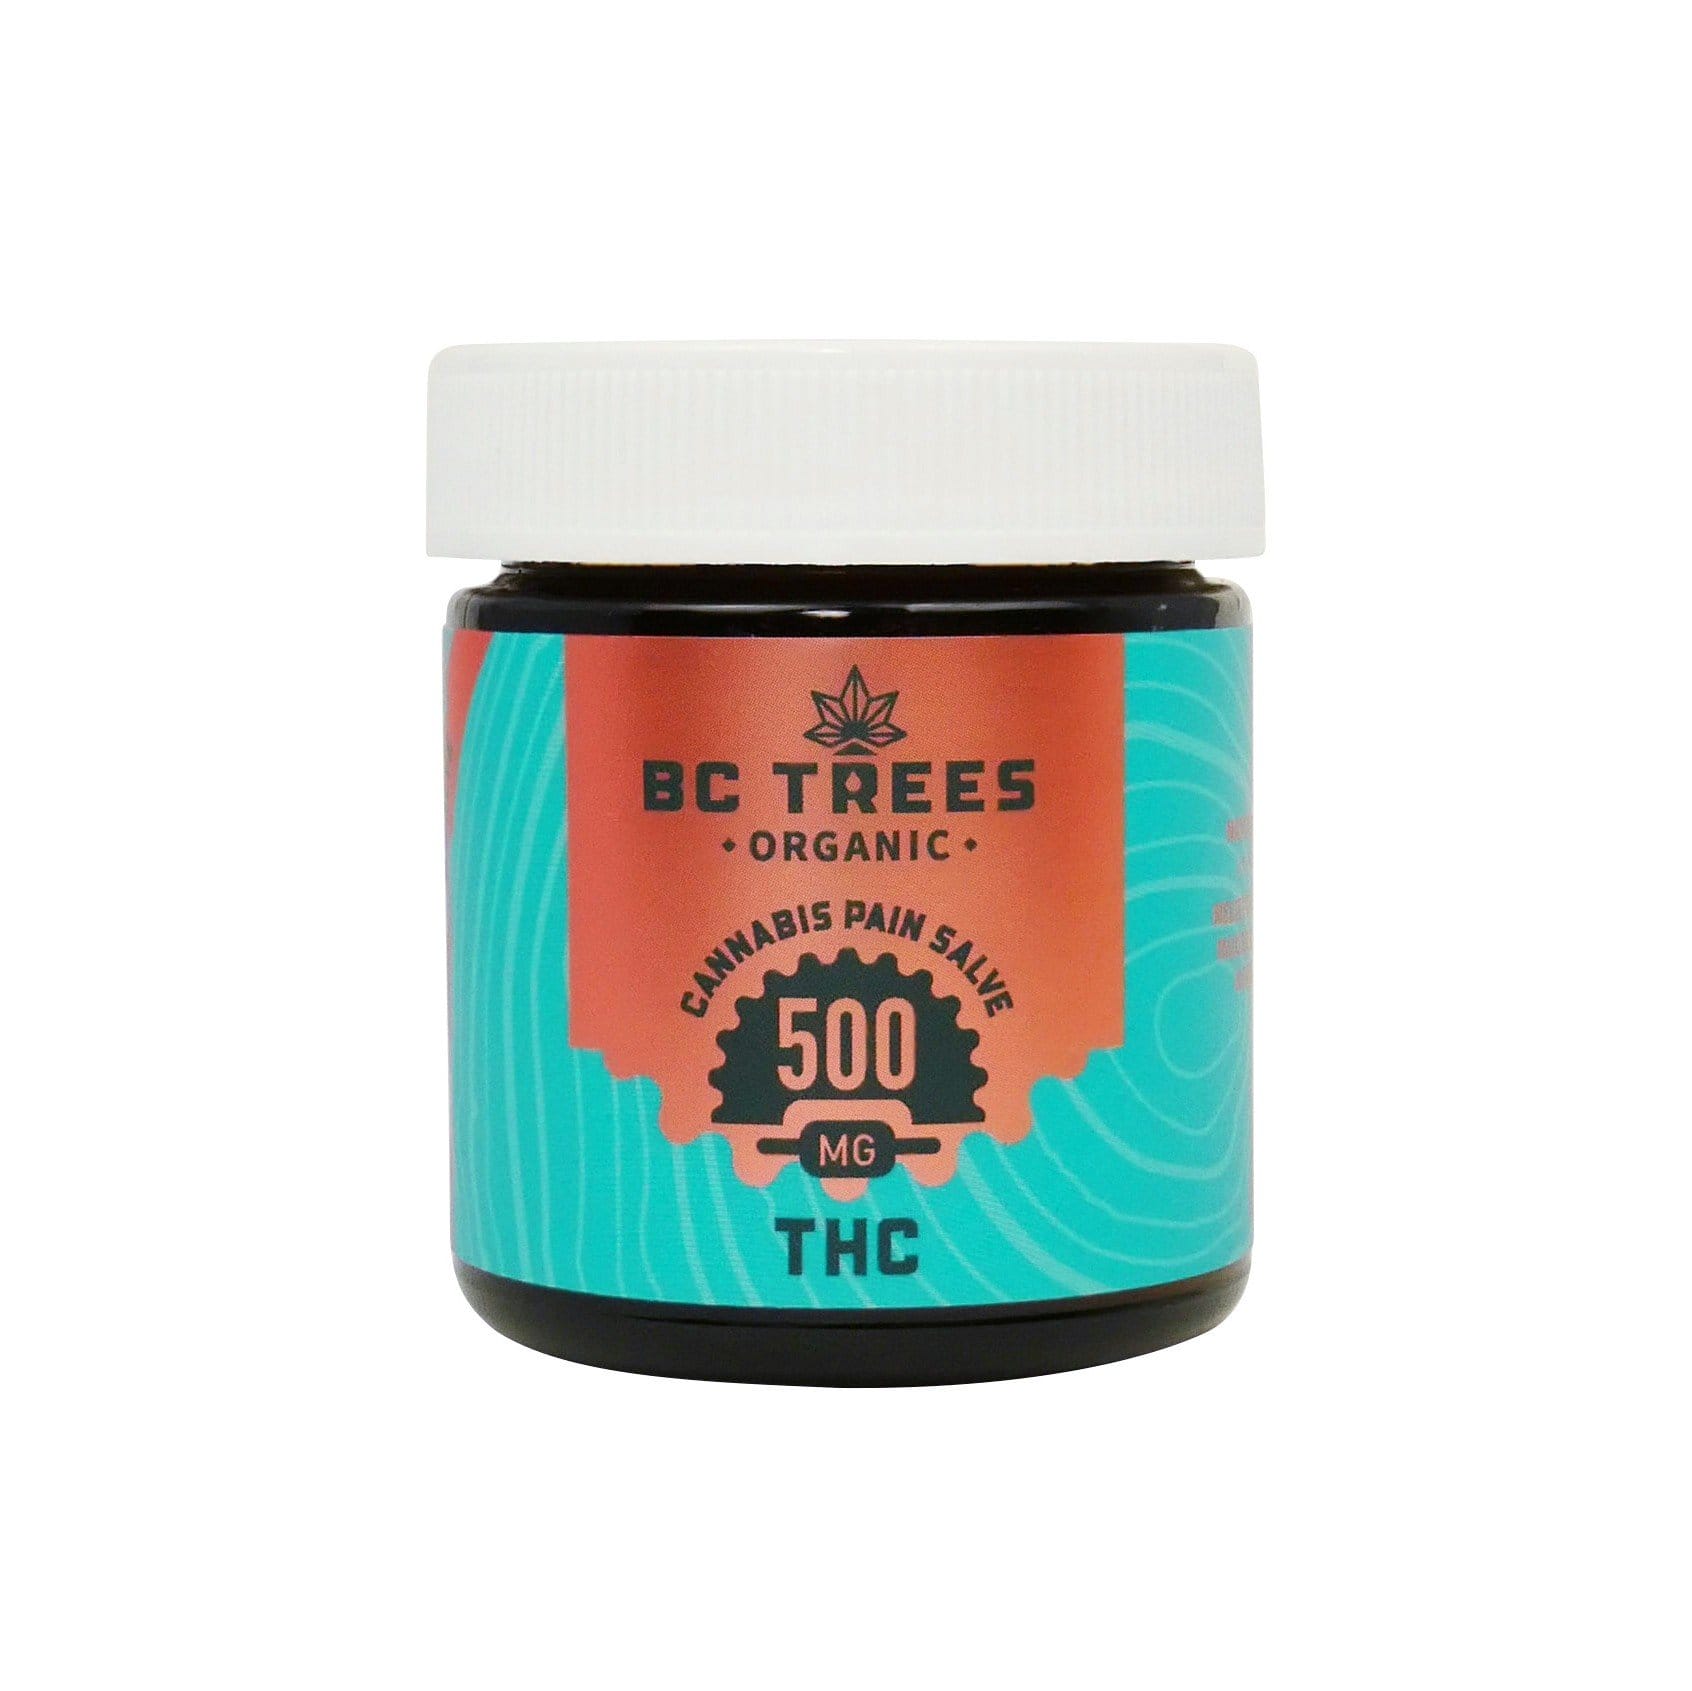 BC Trees - Cannabis Pain Salve